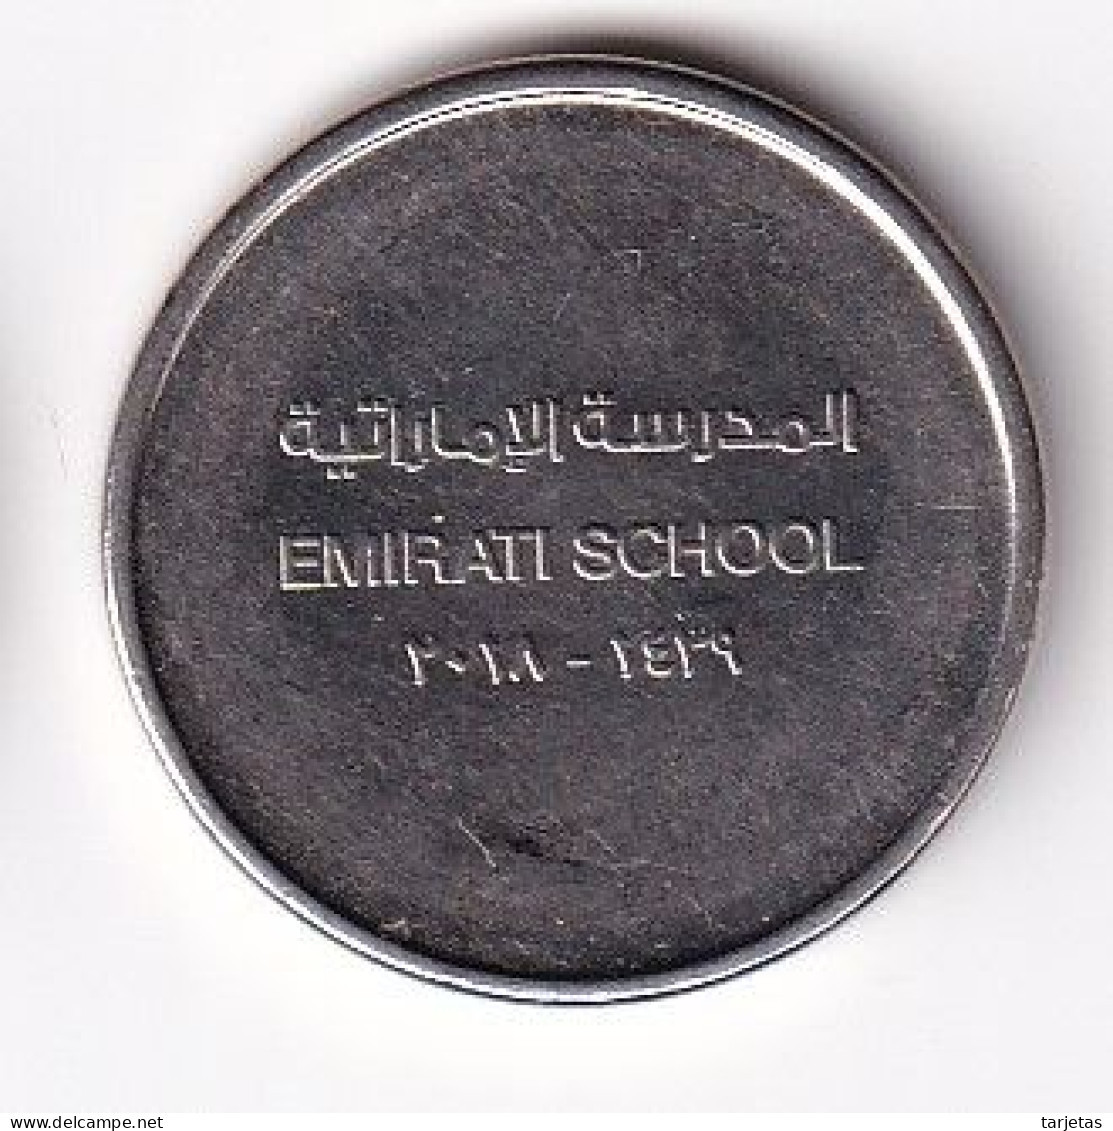 MONEDA DE EMIRATOS ARABES DE 1 DIRHAM DEL AÑO 2018 - EMIRATI SCHOOL (COIN) - Ver. Arab. Emirate